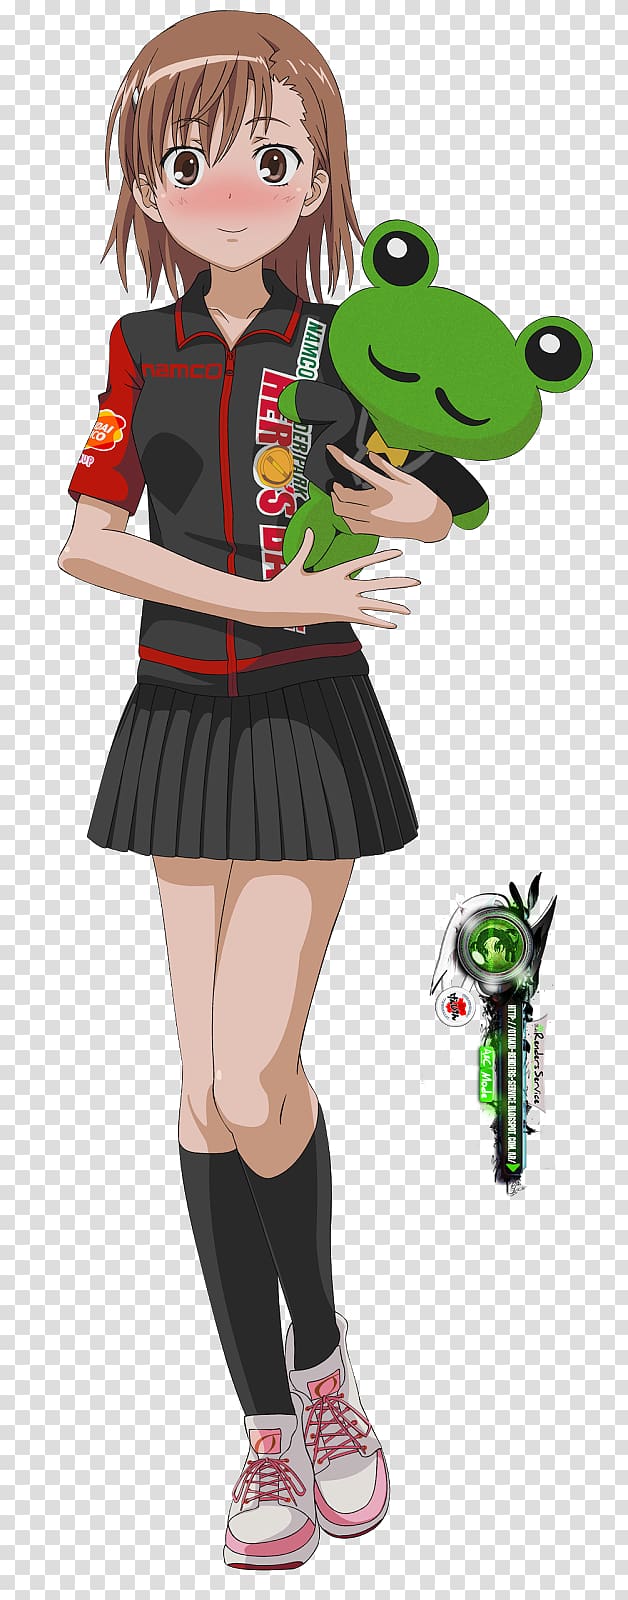 Mikoto Misaka A Certain Scientific Railgun A Certain Magical Index Anime, short skirt transparent background PNG clipart